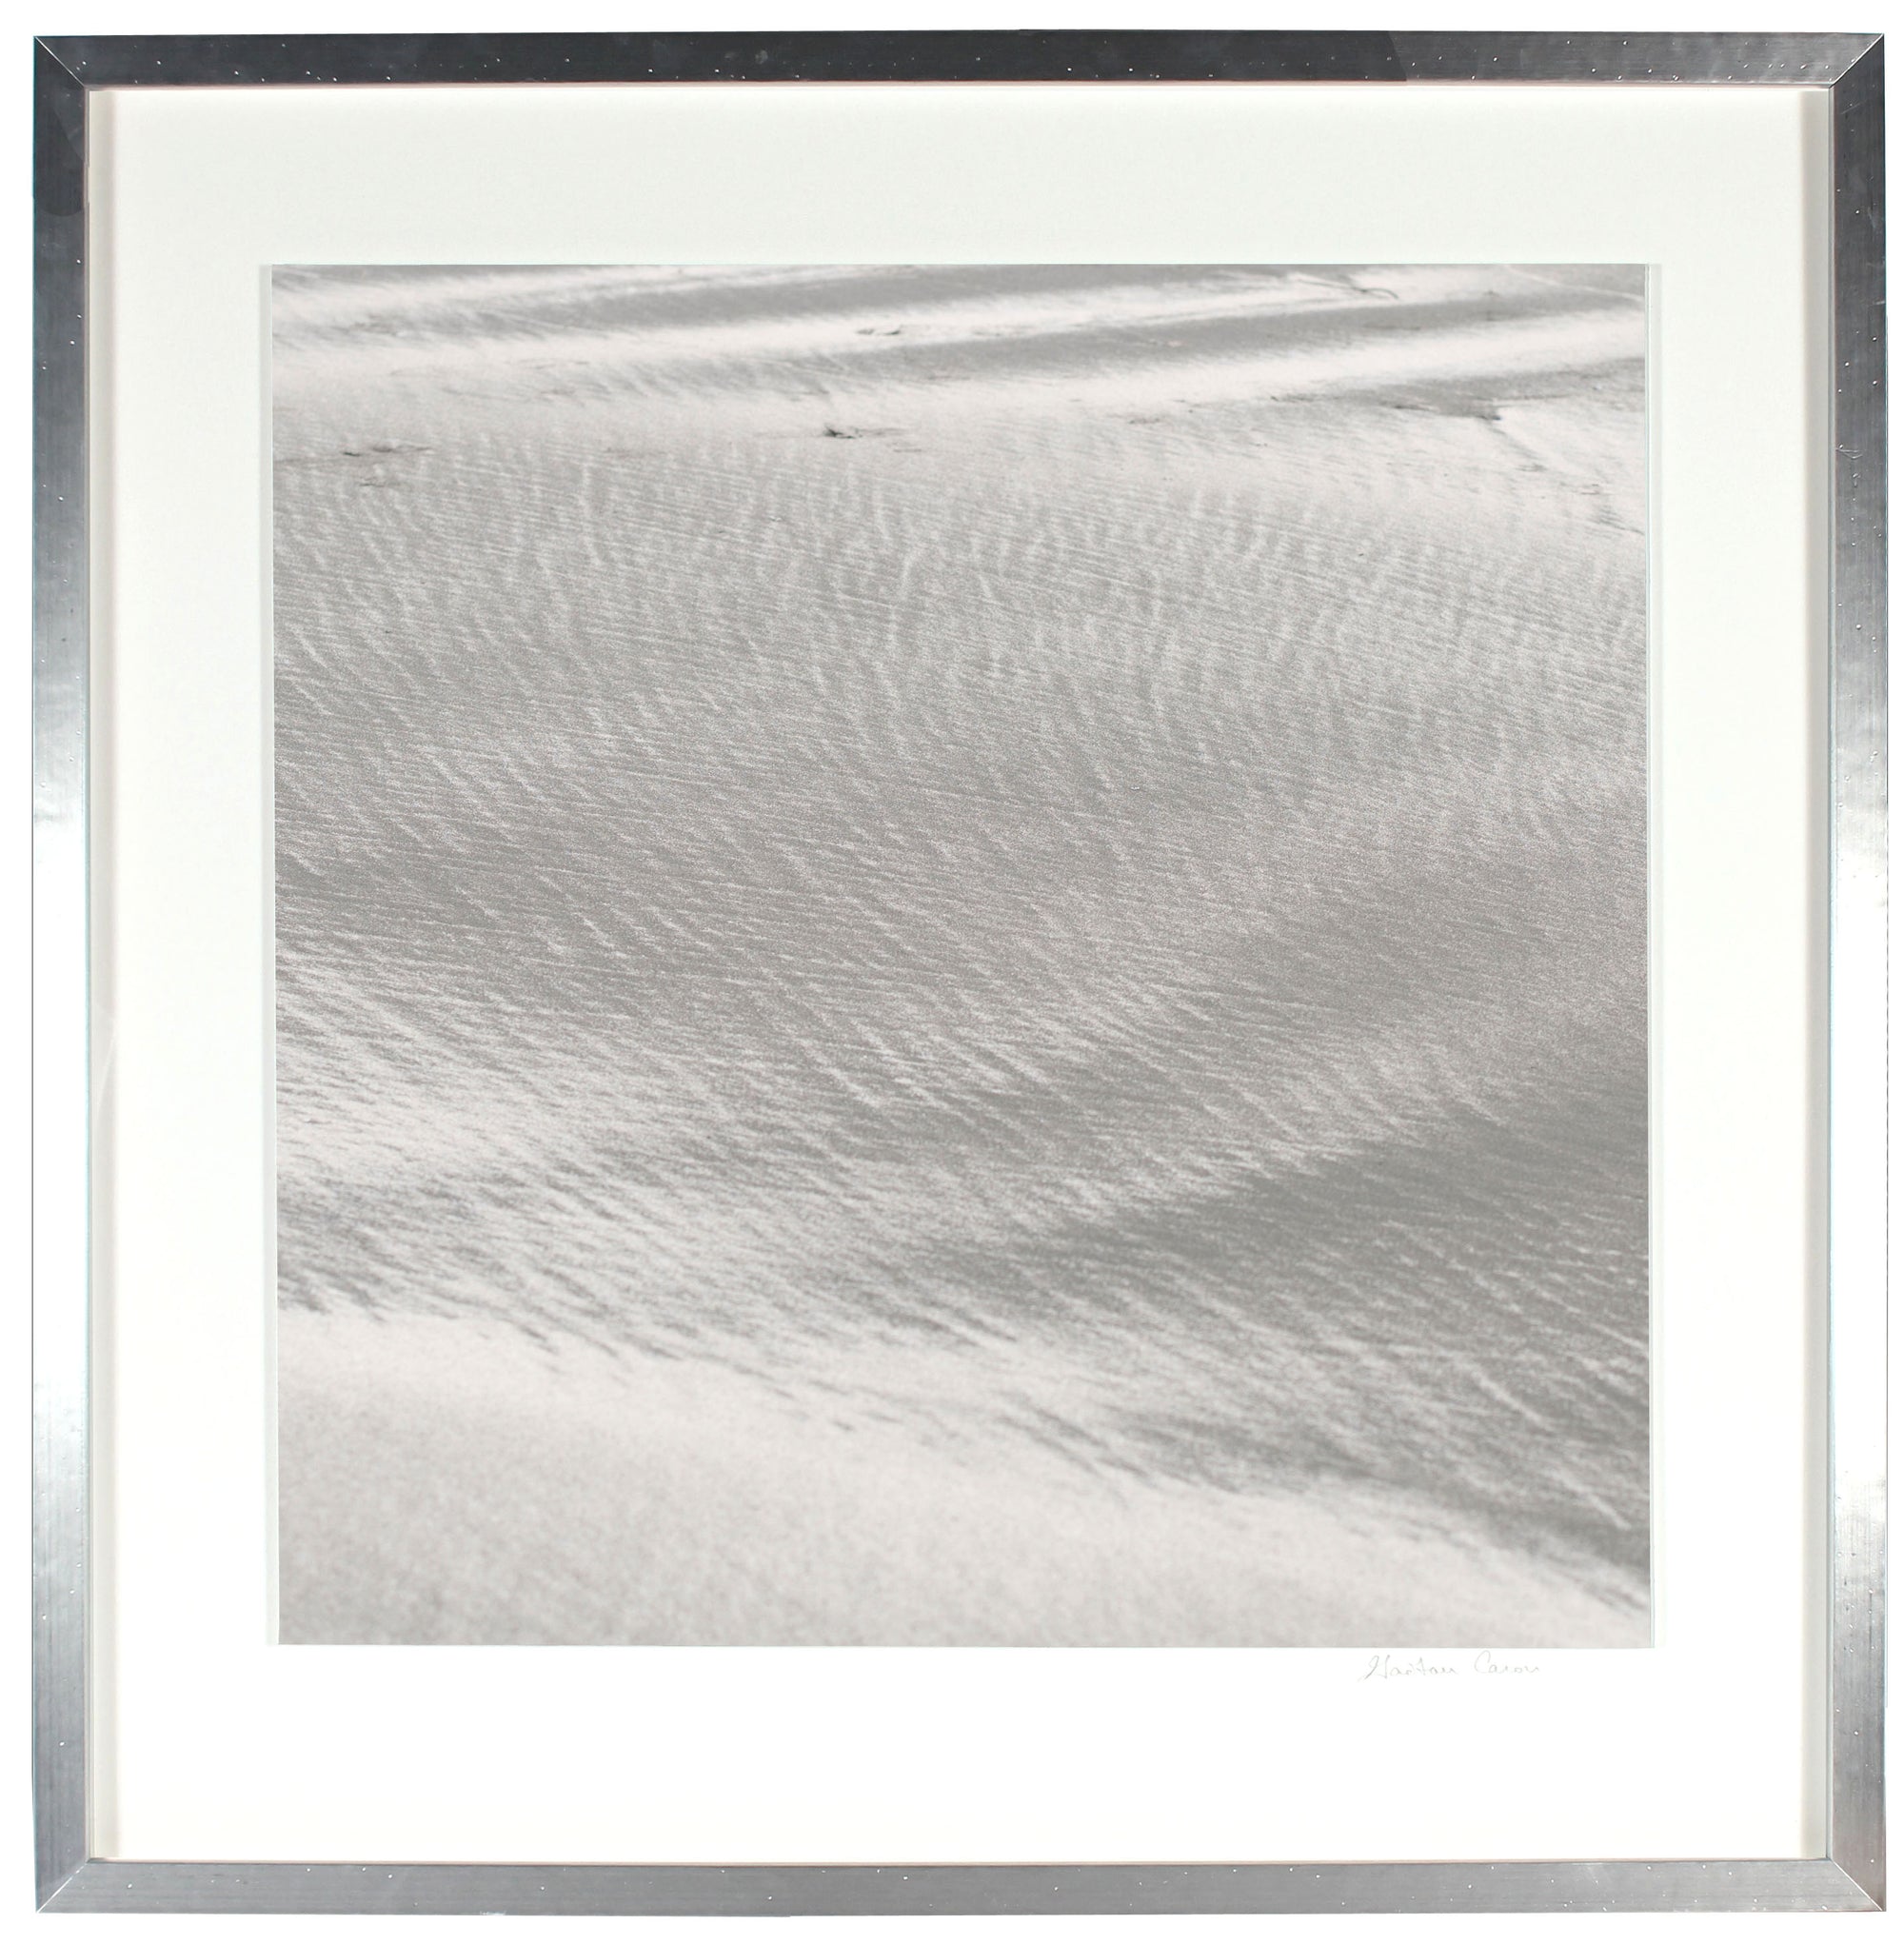 <I>Texture 10: Shell Dust</I><br>Mendocino Coast, California, 2015<br><br>GC0393